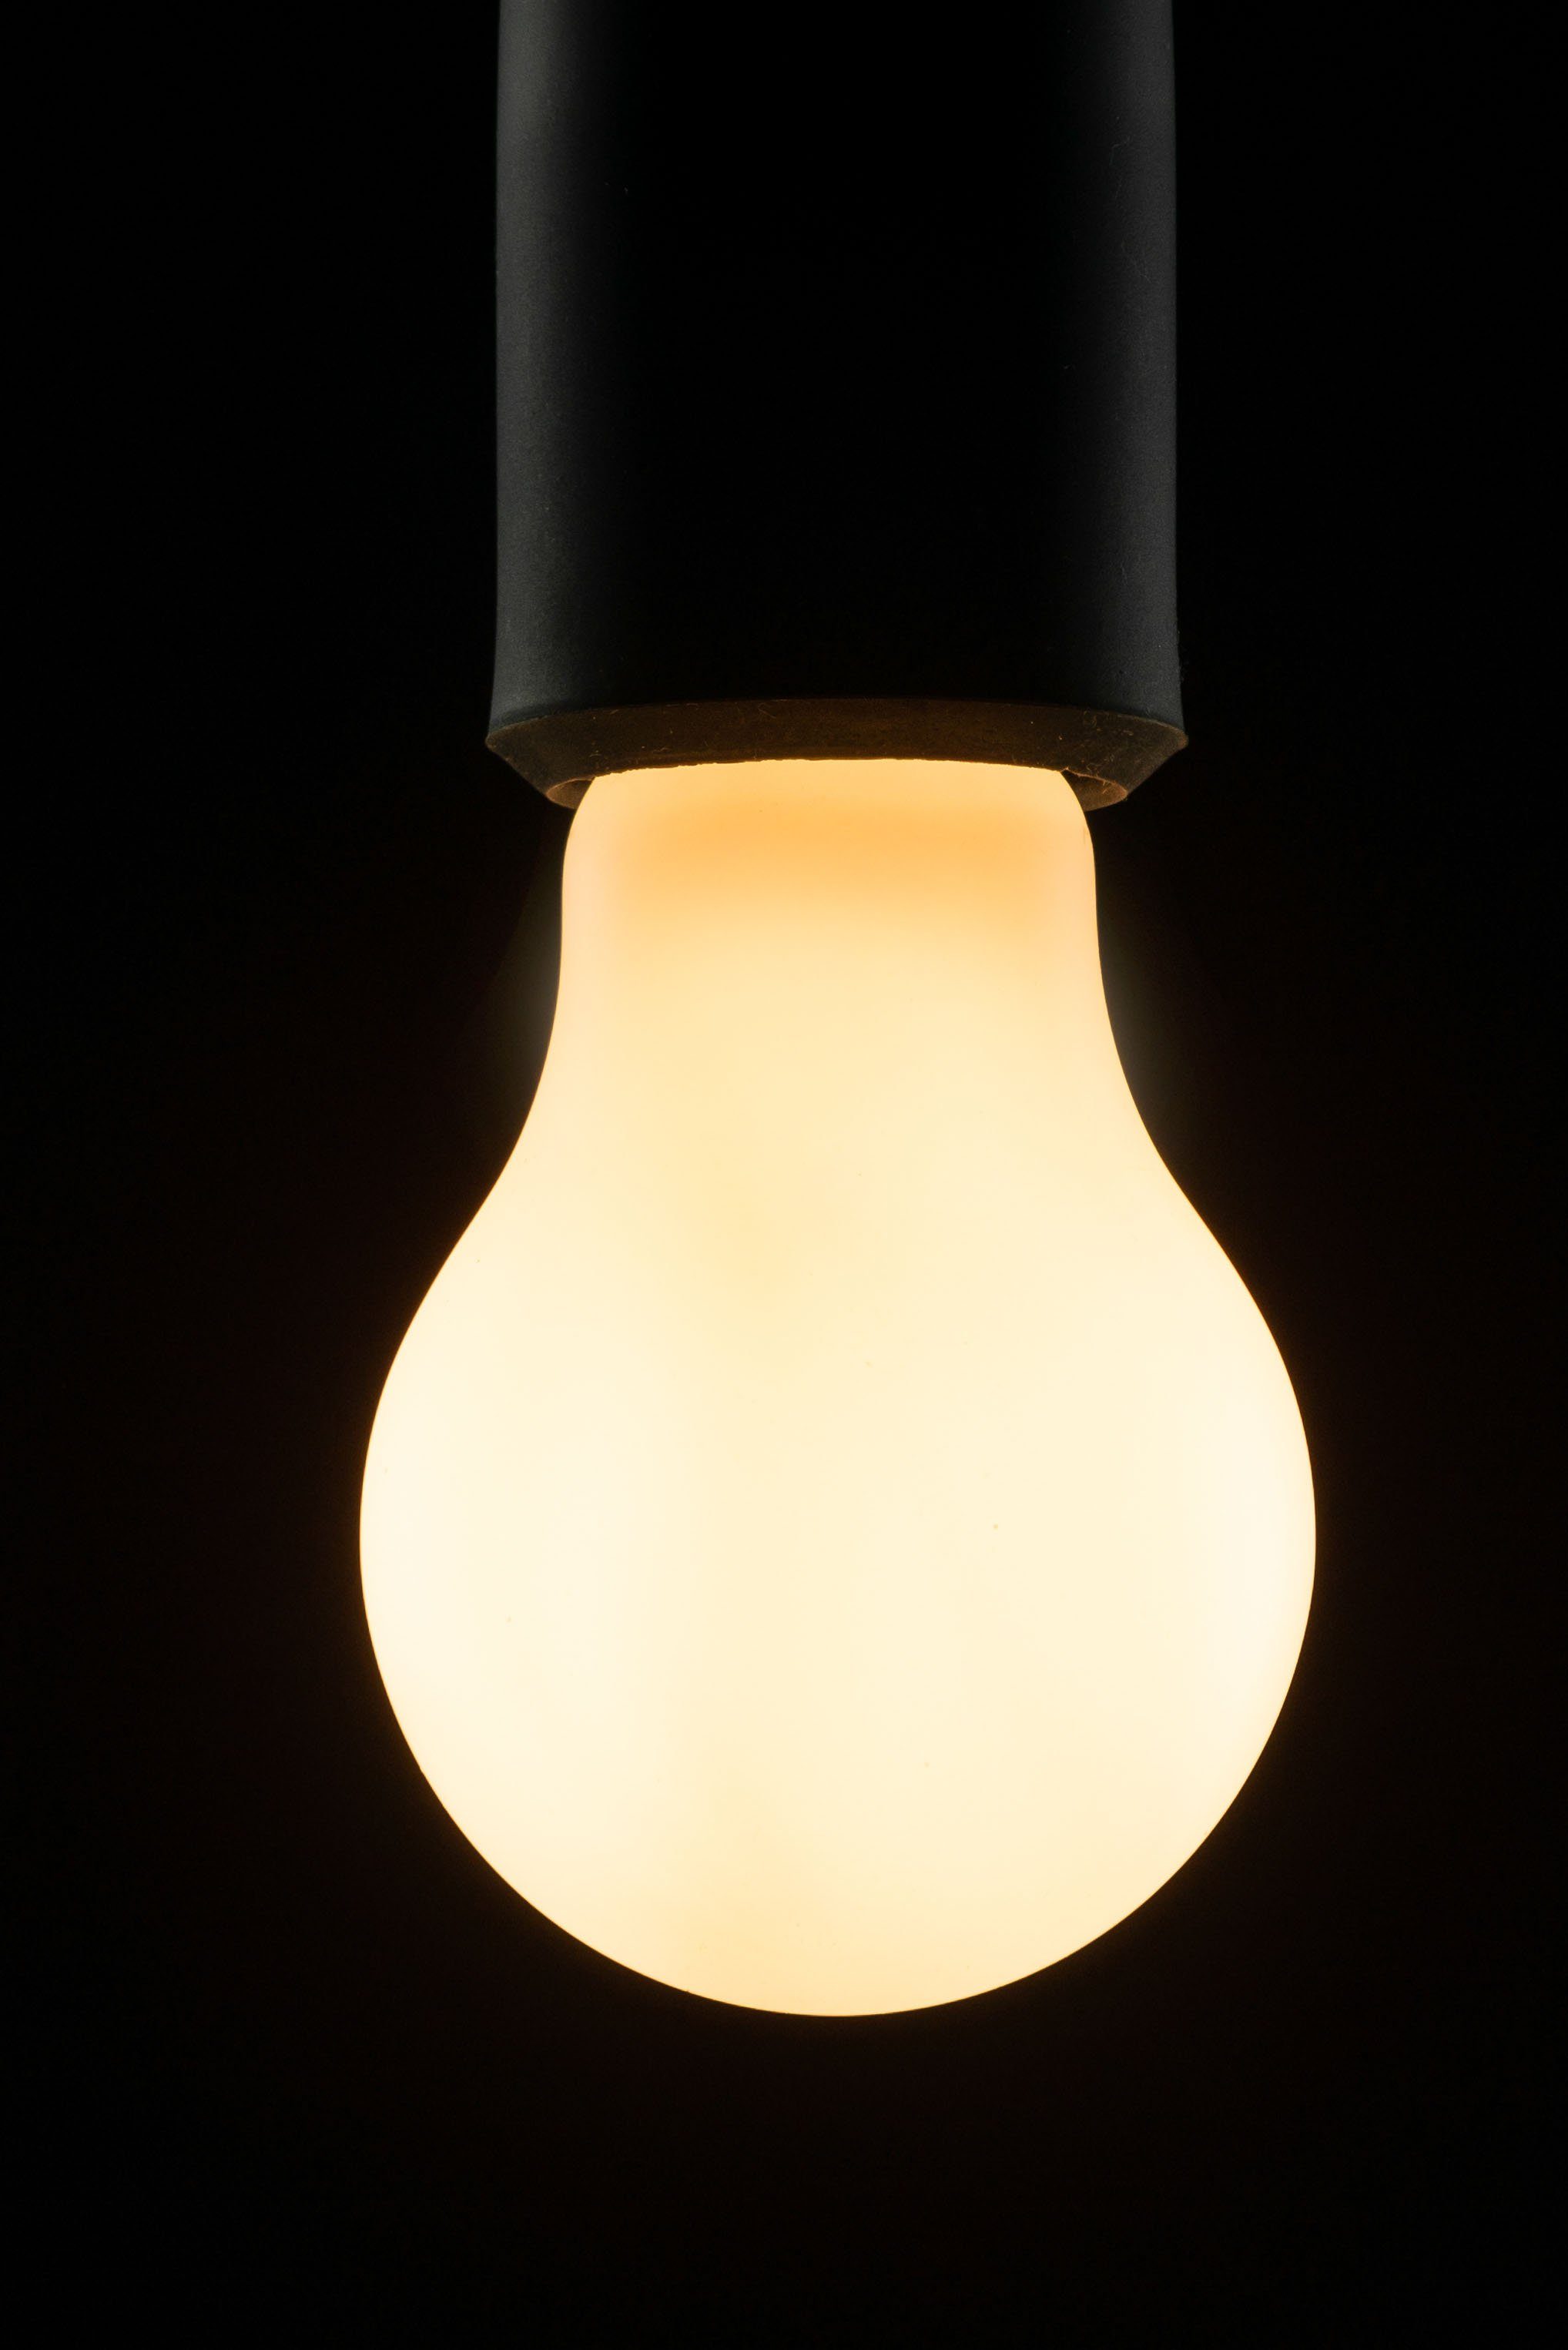 SEGULA LED-Leuchtmittel Vintage Line, dimmbar, St., Warmweiß, E27, E27 1 Glühlampe opal